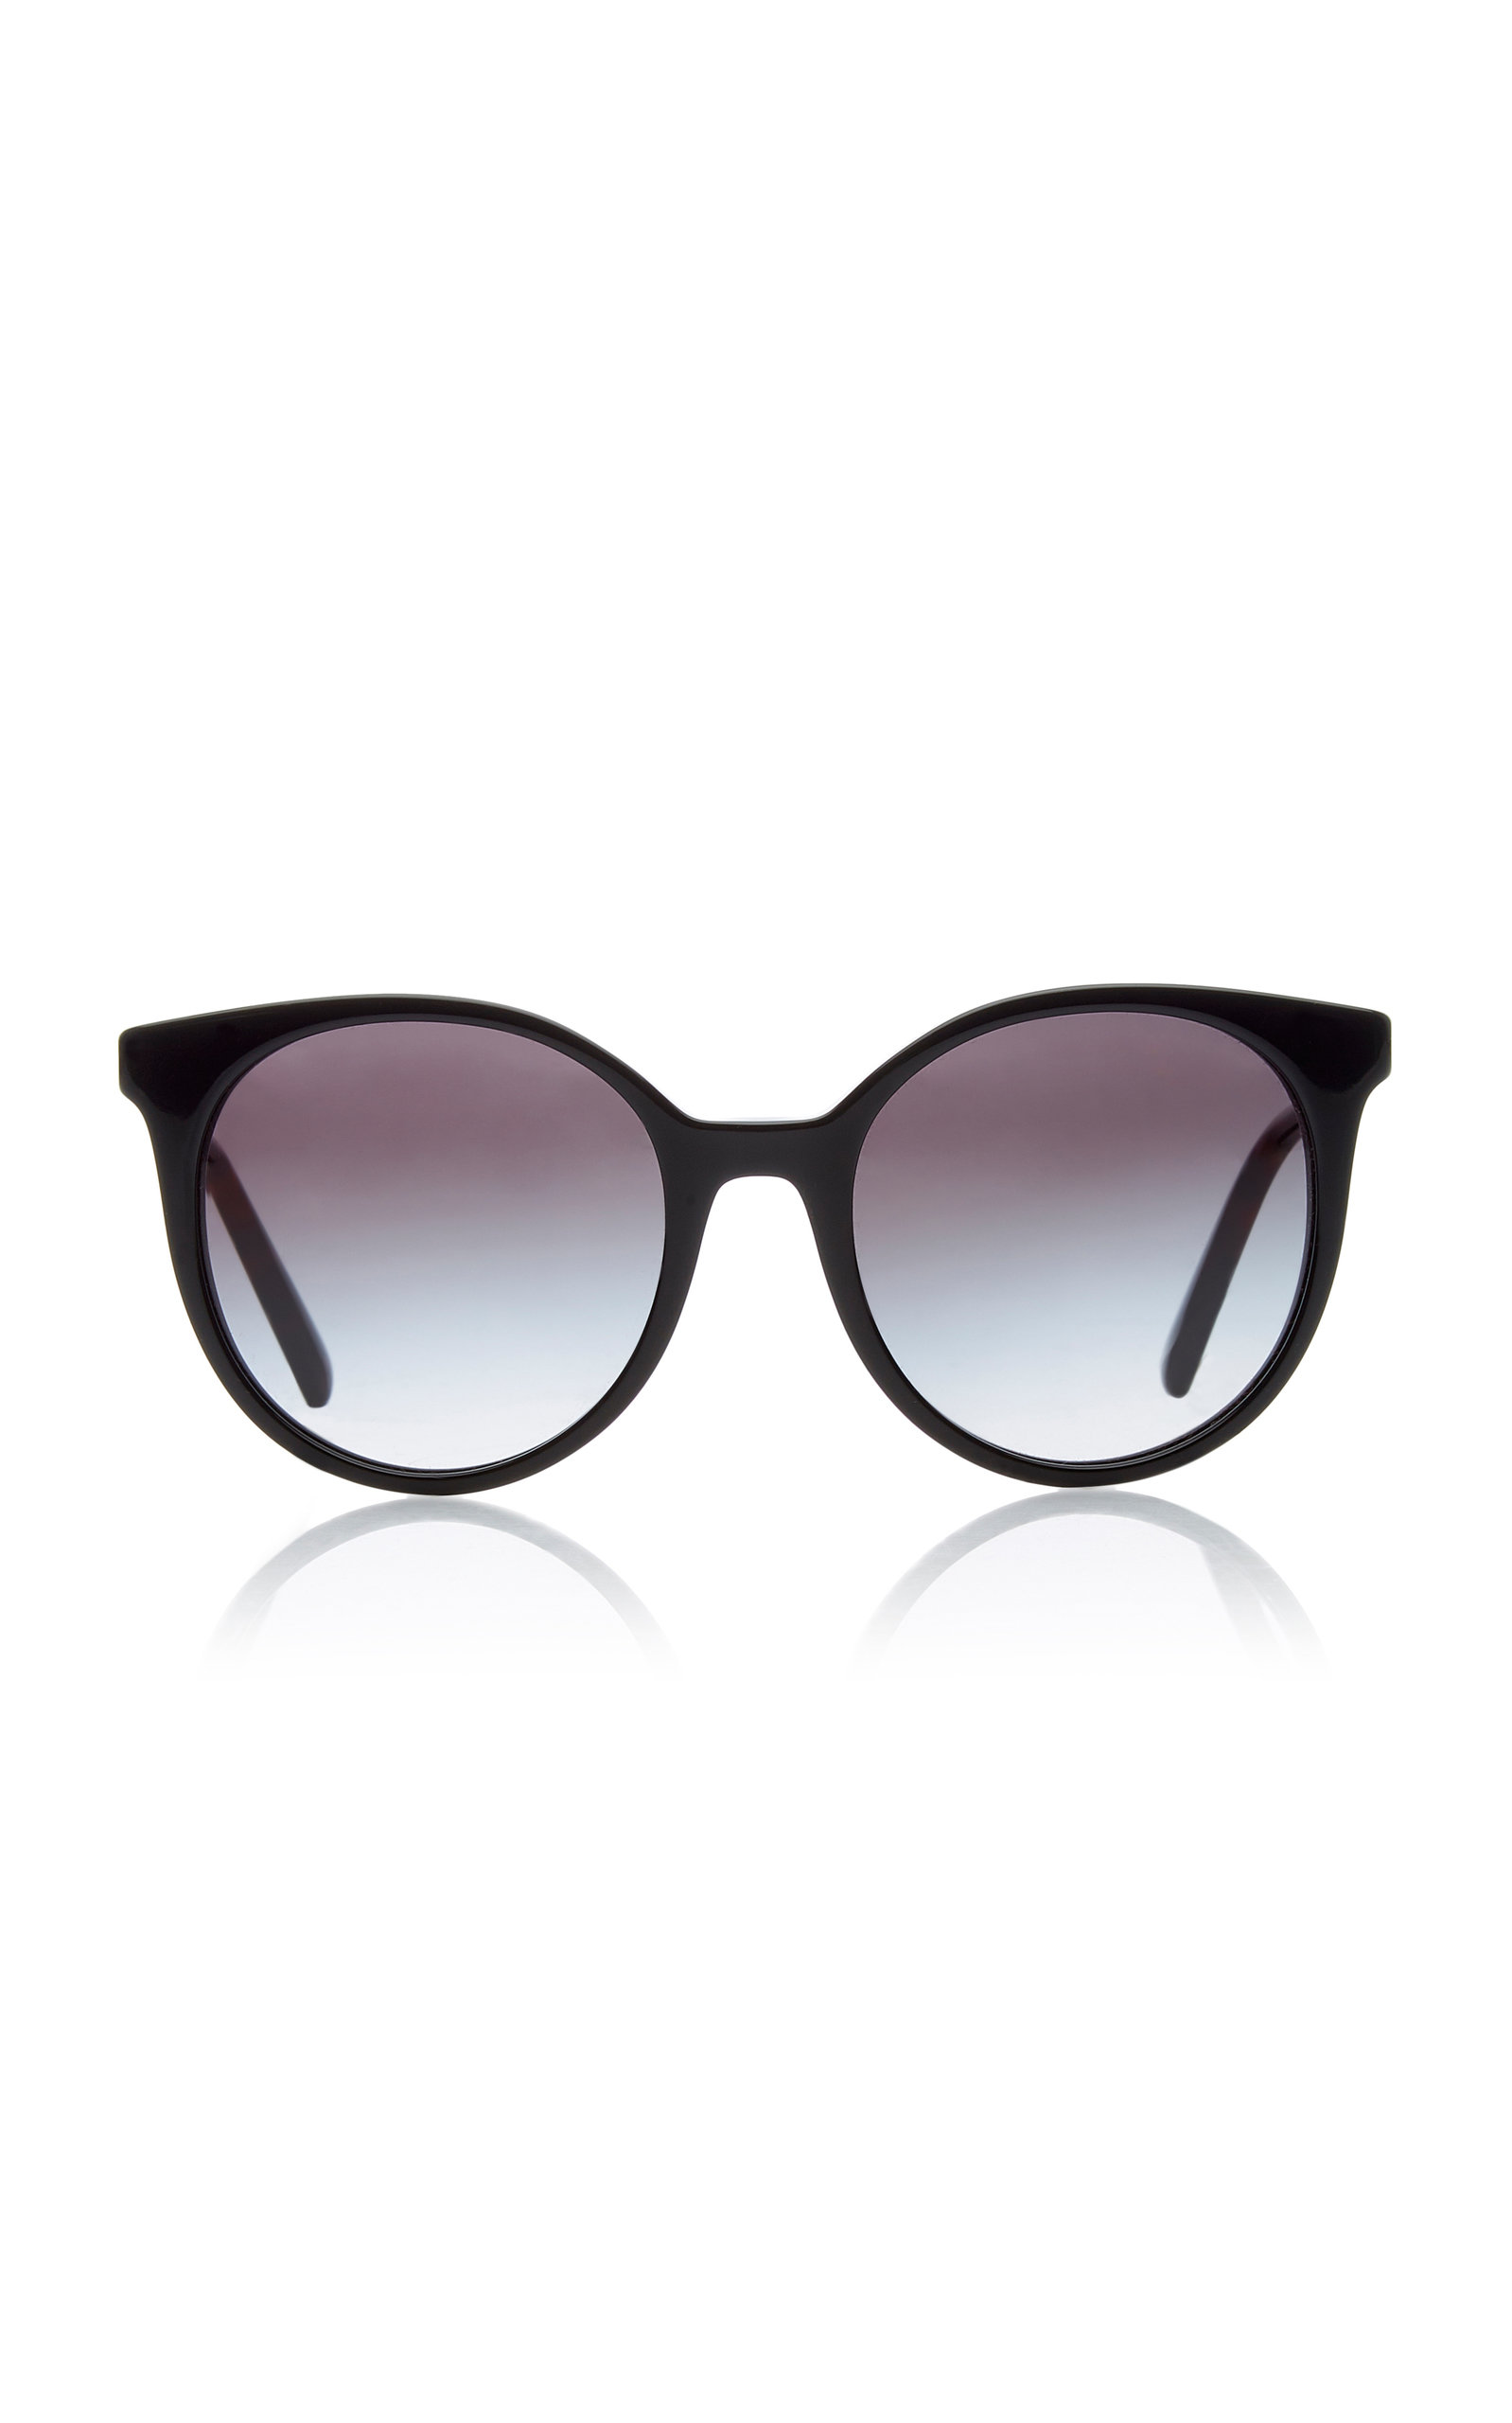 Valentino - Women's Valentino Garavani Rockstud Round Acetate Sunglasses - Black - Moda Operandi